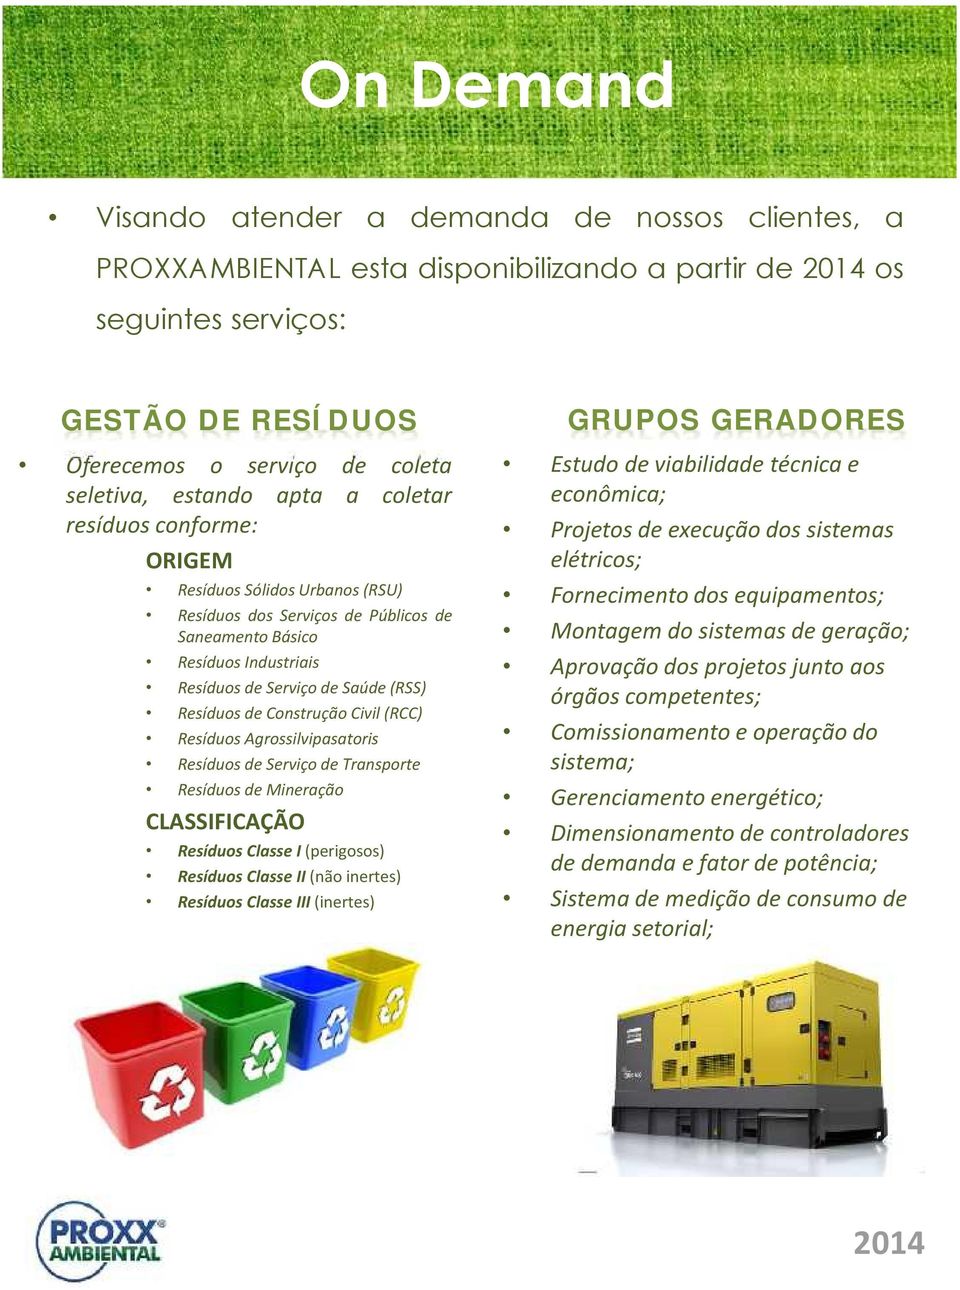 Construção Civil (RCC) Resíduos Agrossilvipasatoris Resíduos de Serviço de Transporte Resíduos de Mineração CLASSIFICAÇÃO Resíduos Classe I (perigosos) Resíduos Classe II (não inertes) Resíduos